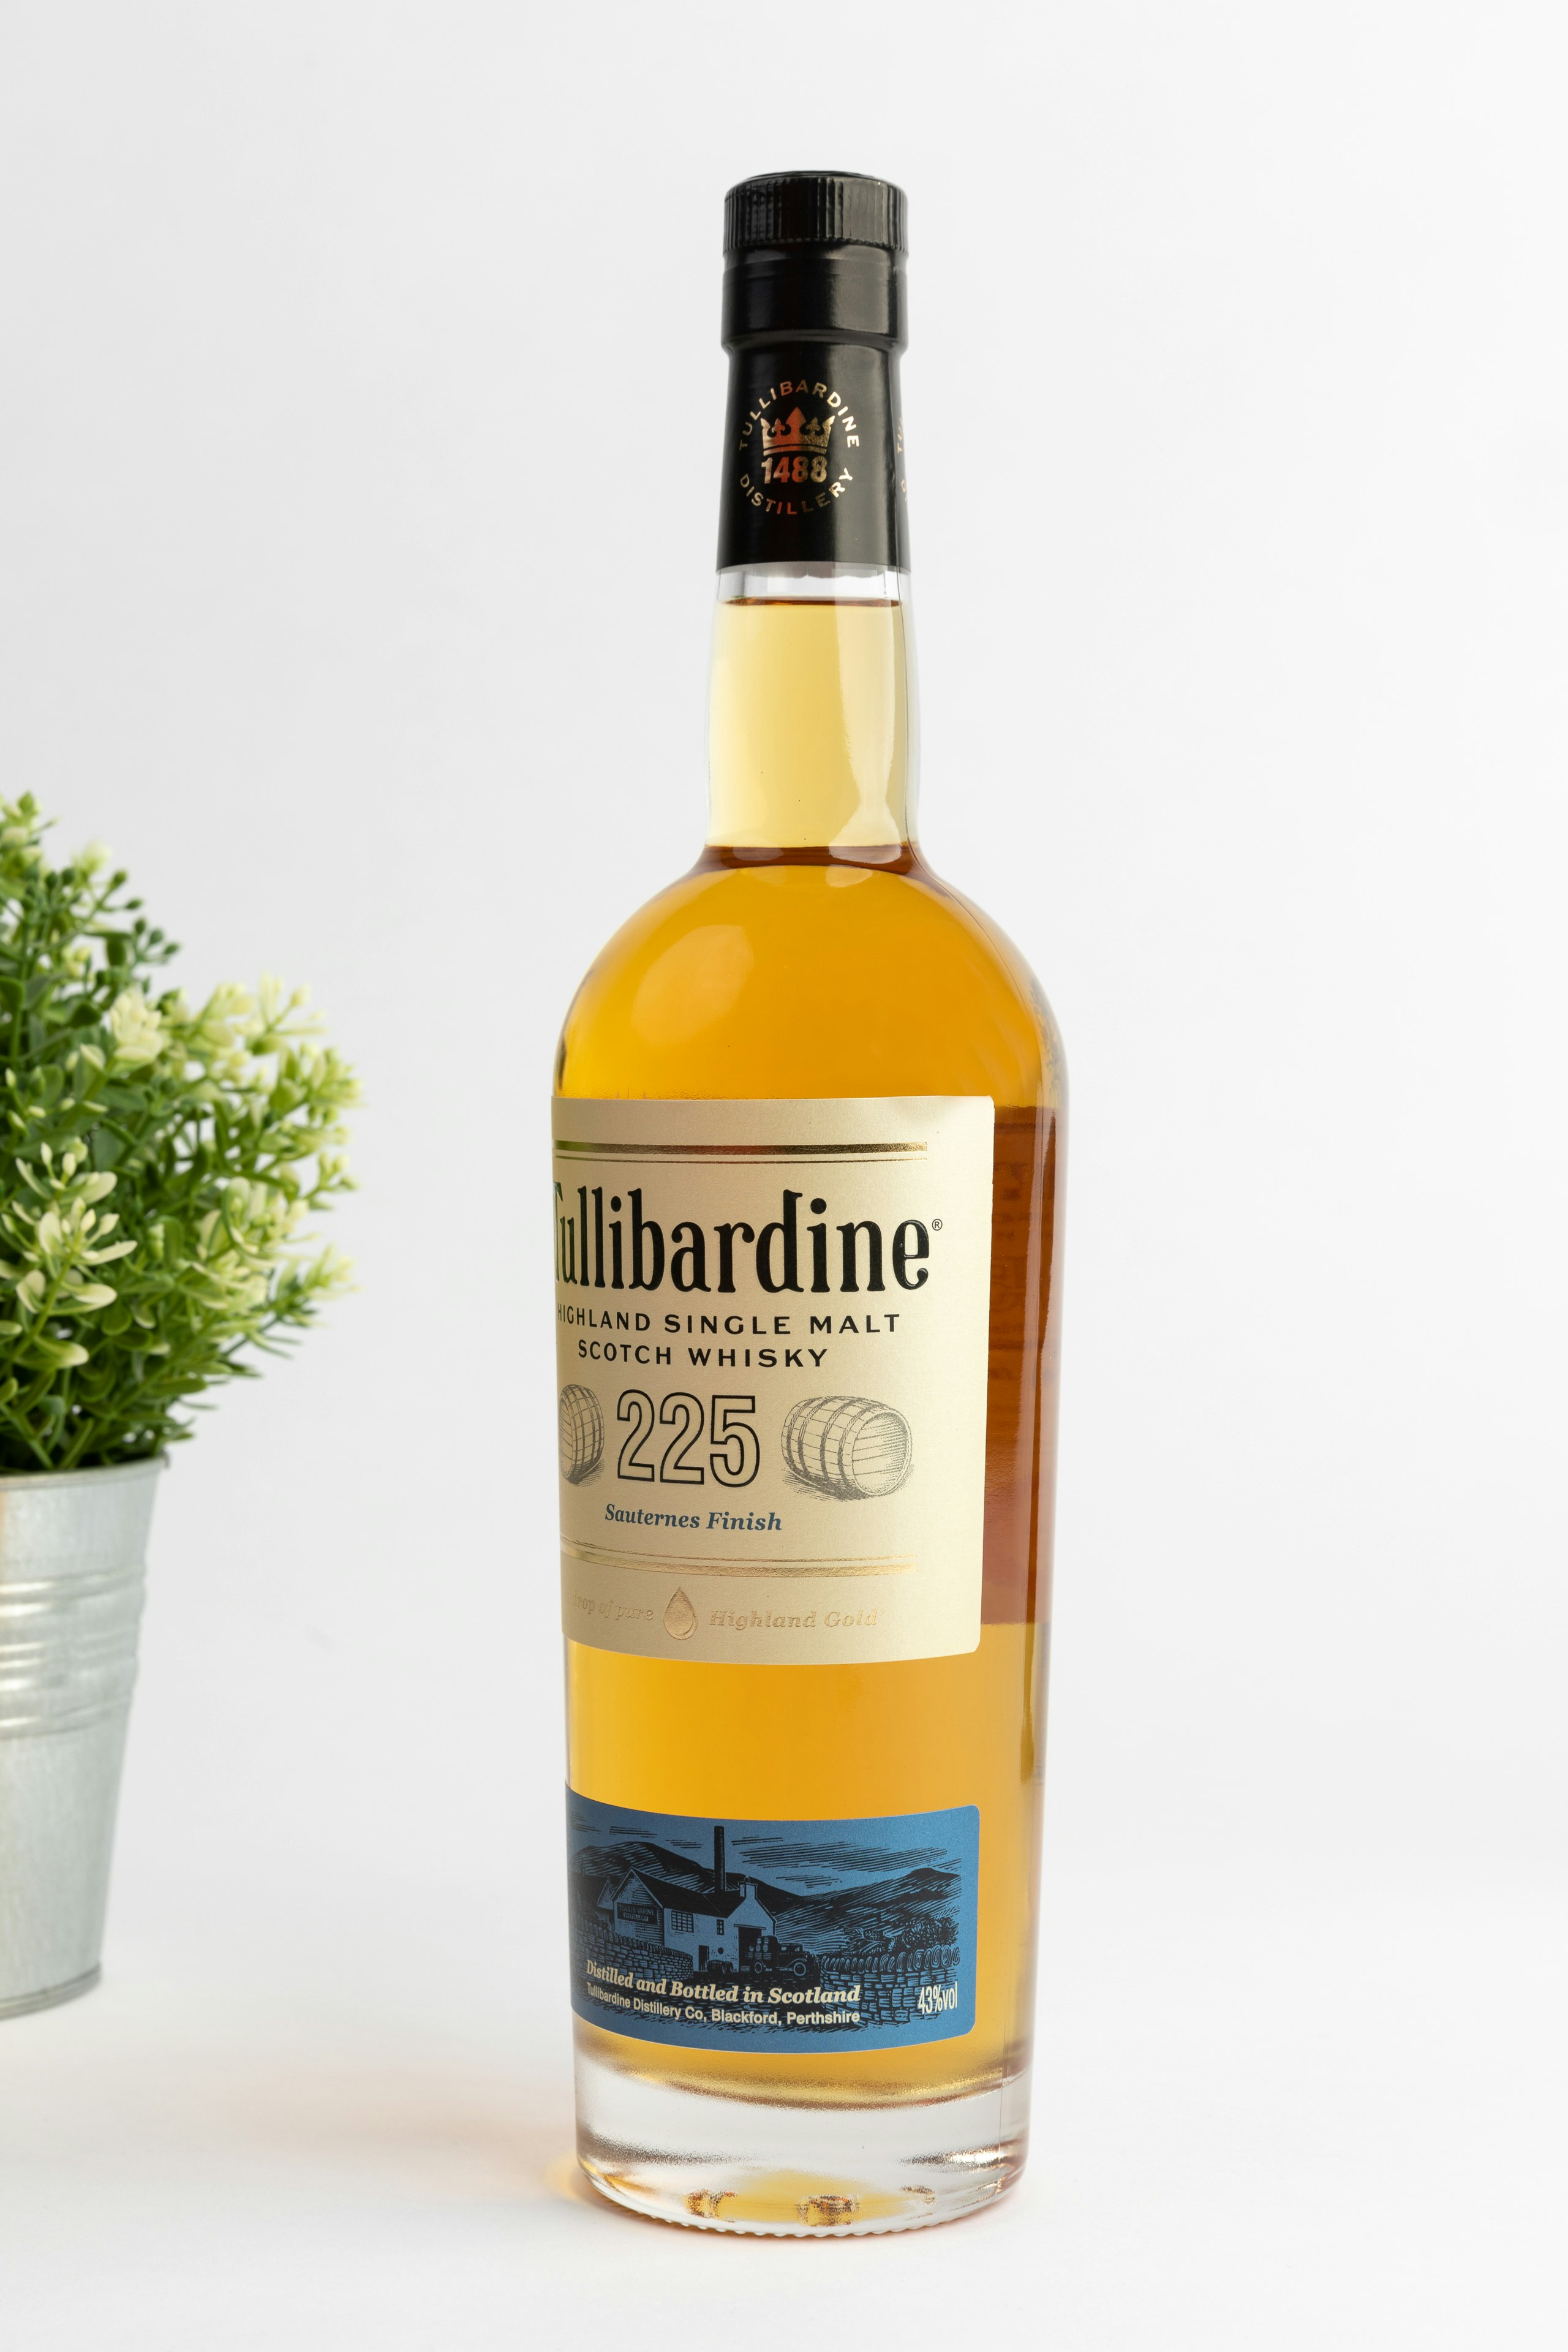 Collibardine scotch whisky